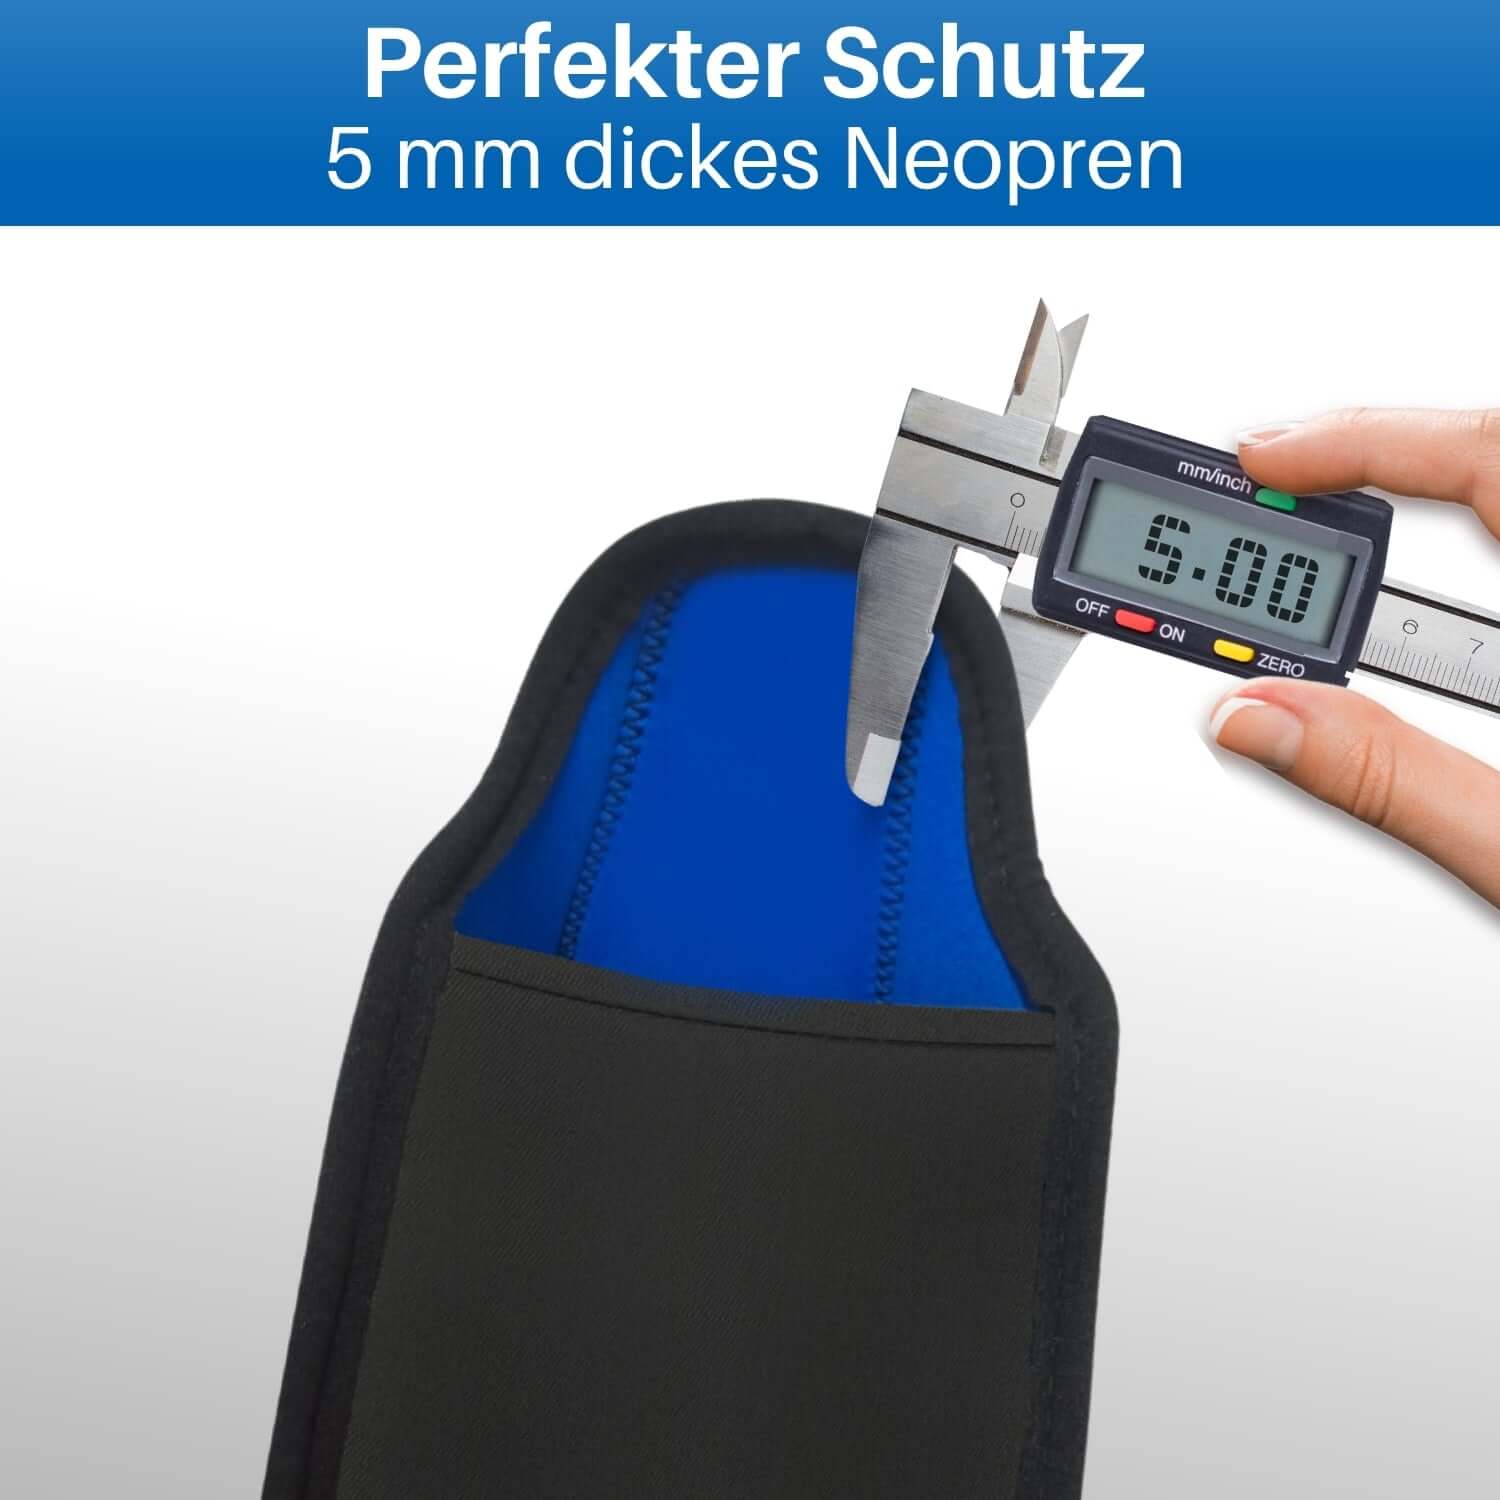 5mm dickes Neopren Schutz Material für Bosch Powerpack Akkus.